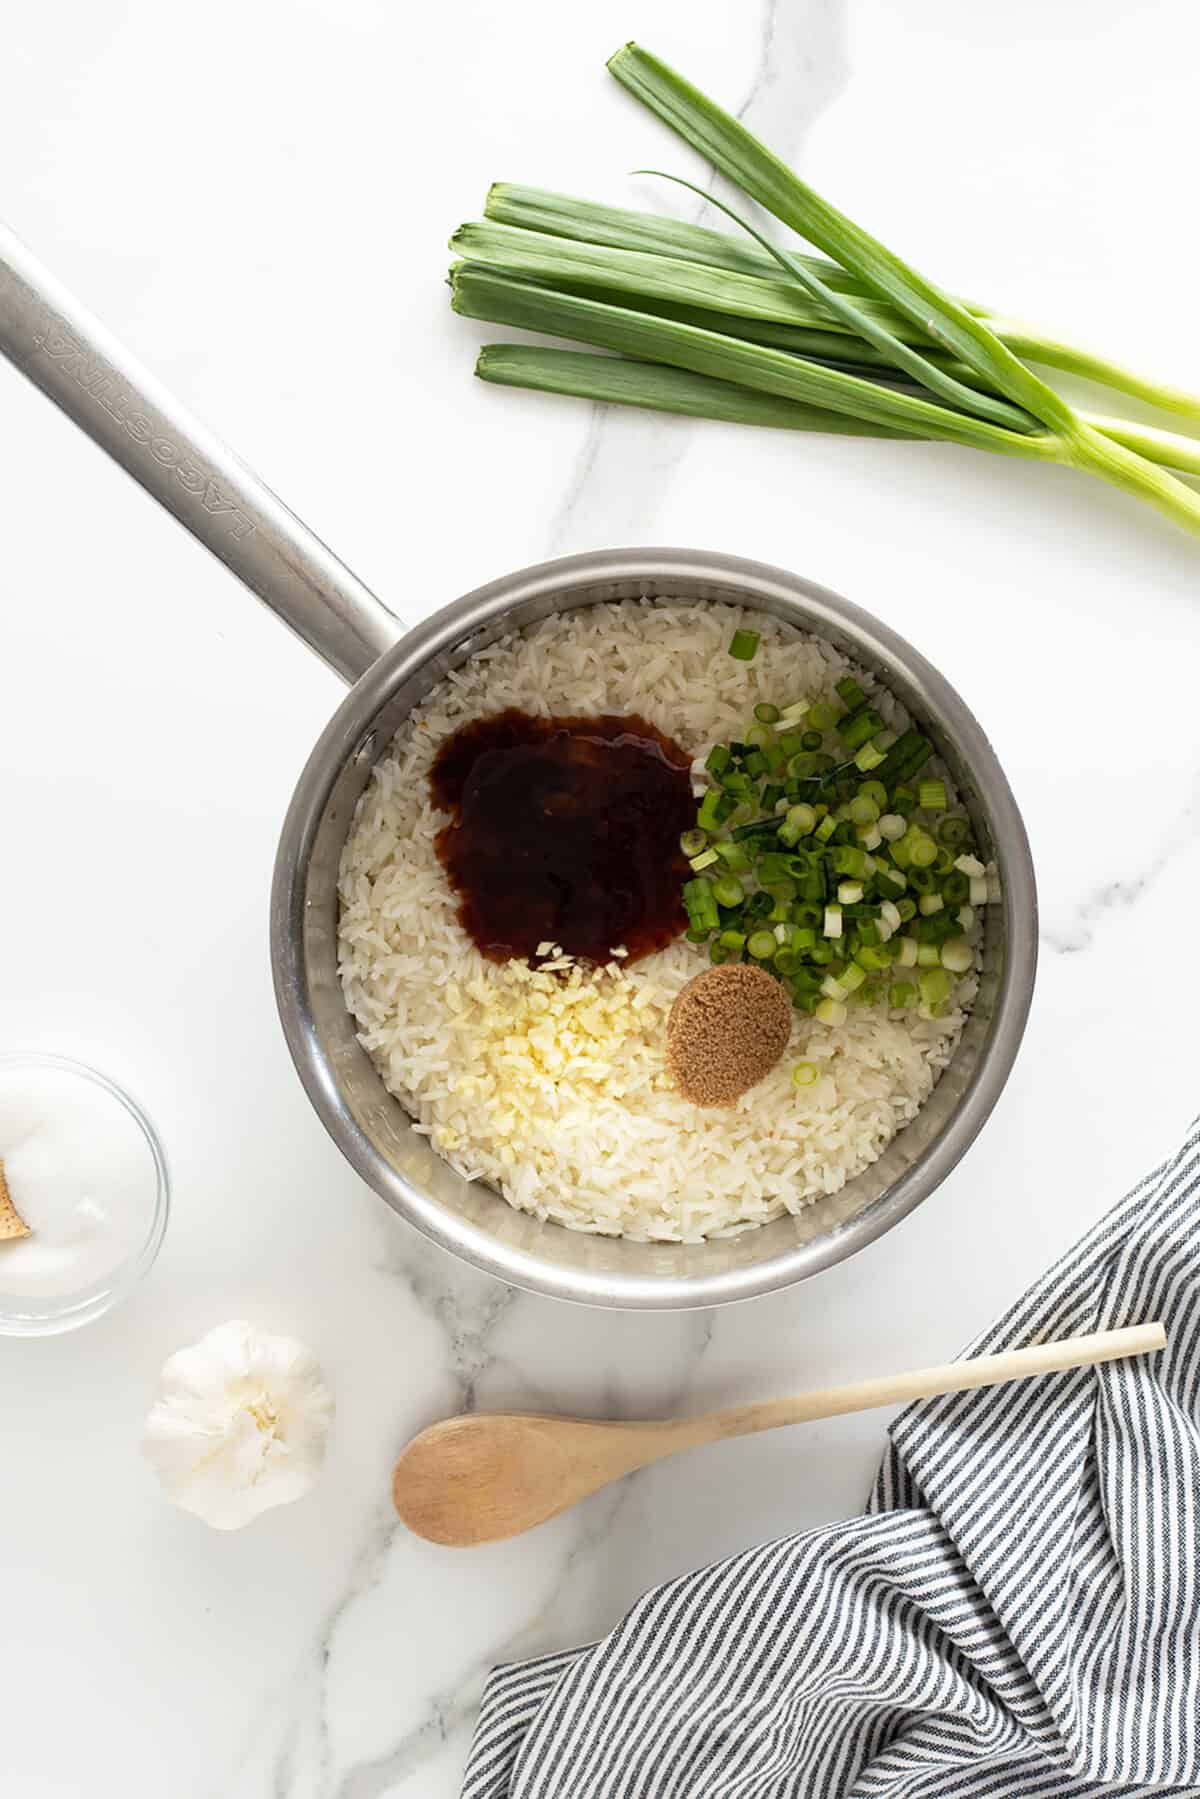 Teriyaki rice separate ingredients in a pot